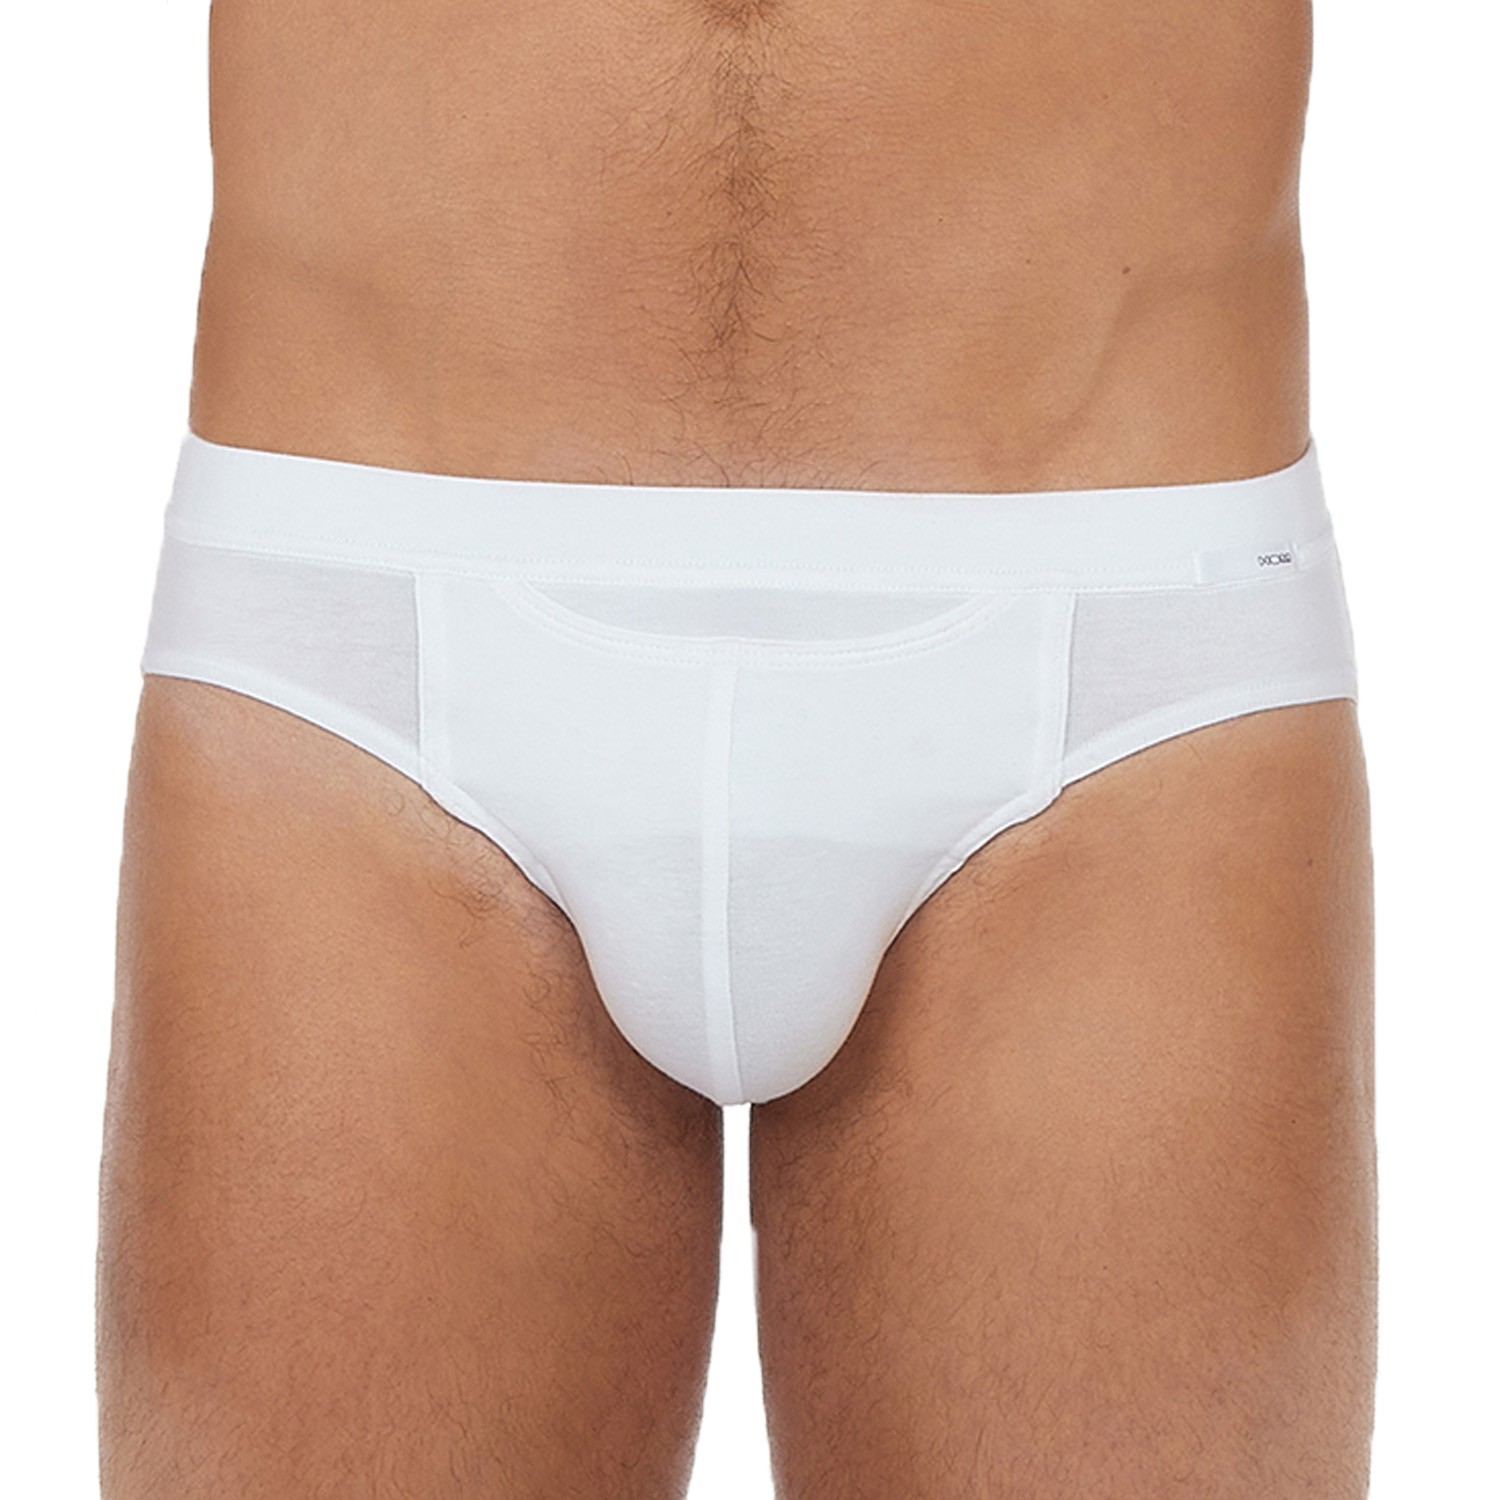 Mini Brief Comfort HO1 Tencel Soft - white: Briefs for man brand HO